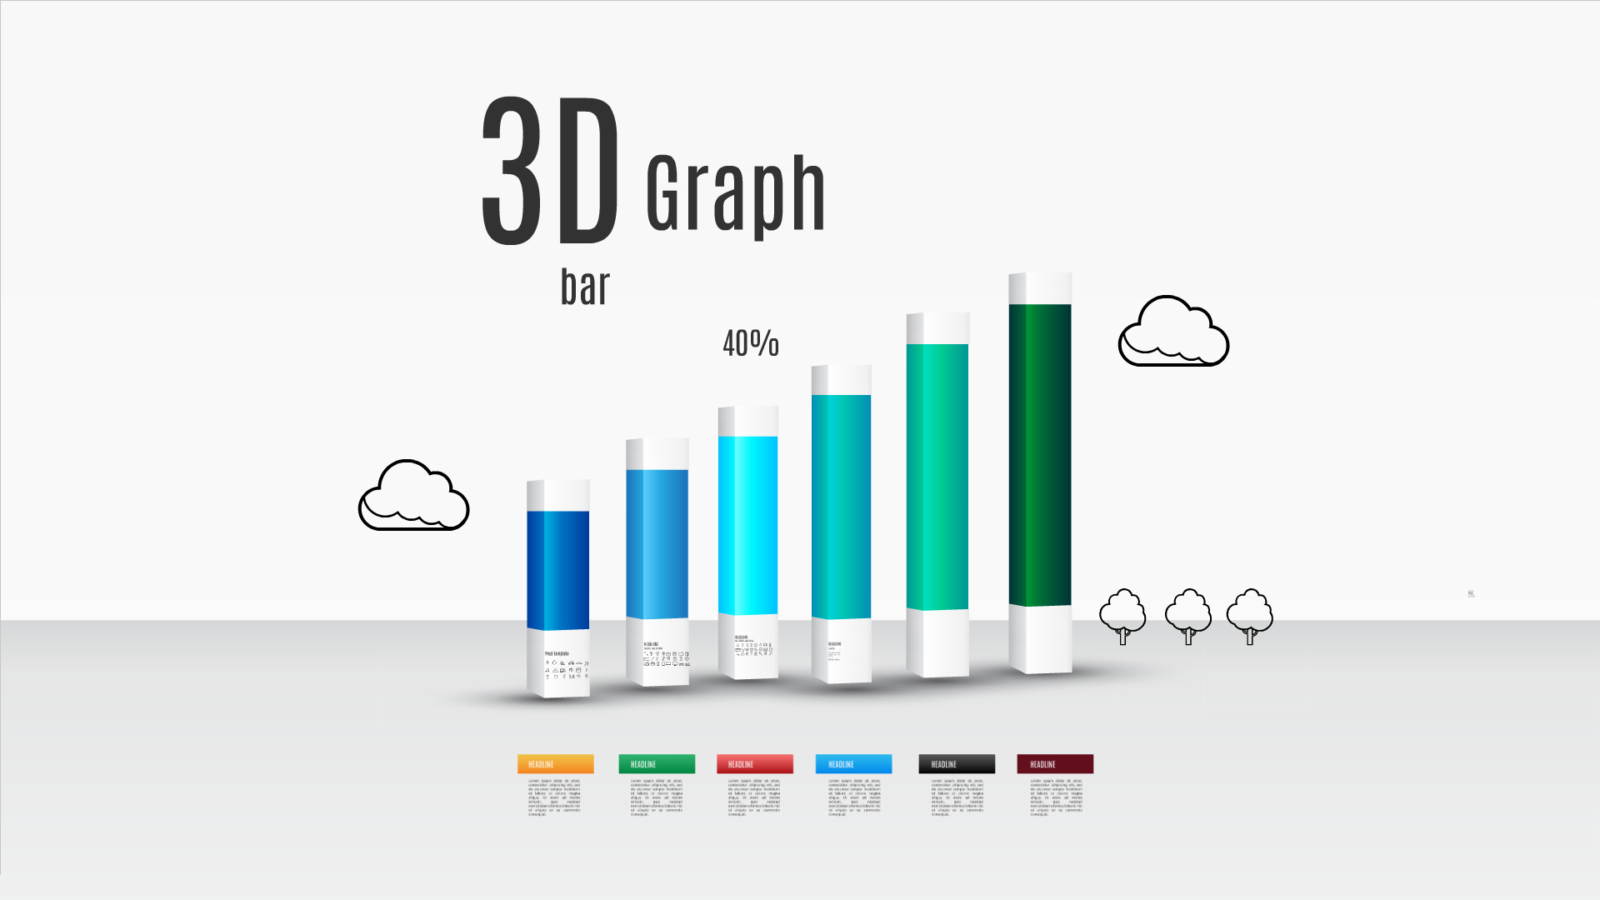 3D bar graph Prezi template for reports